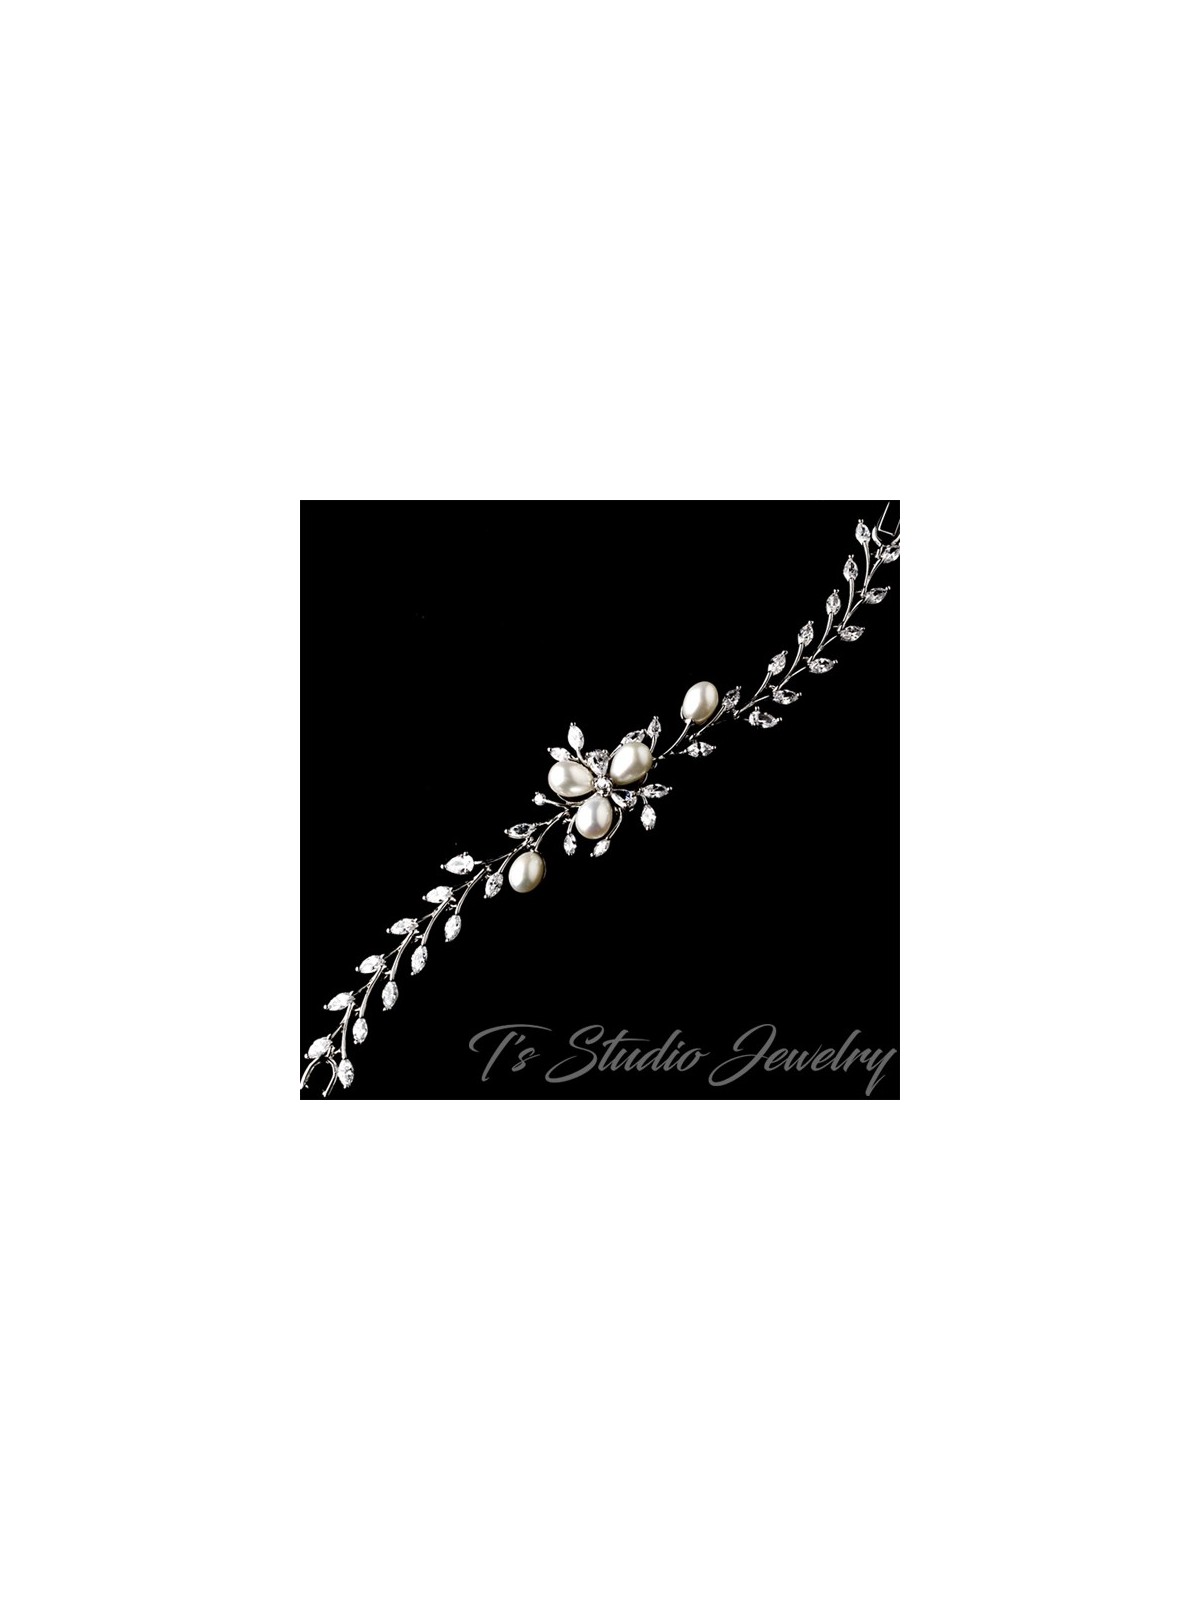 Freshwater Pearl and Crystal Bridal Bracelet